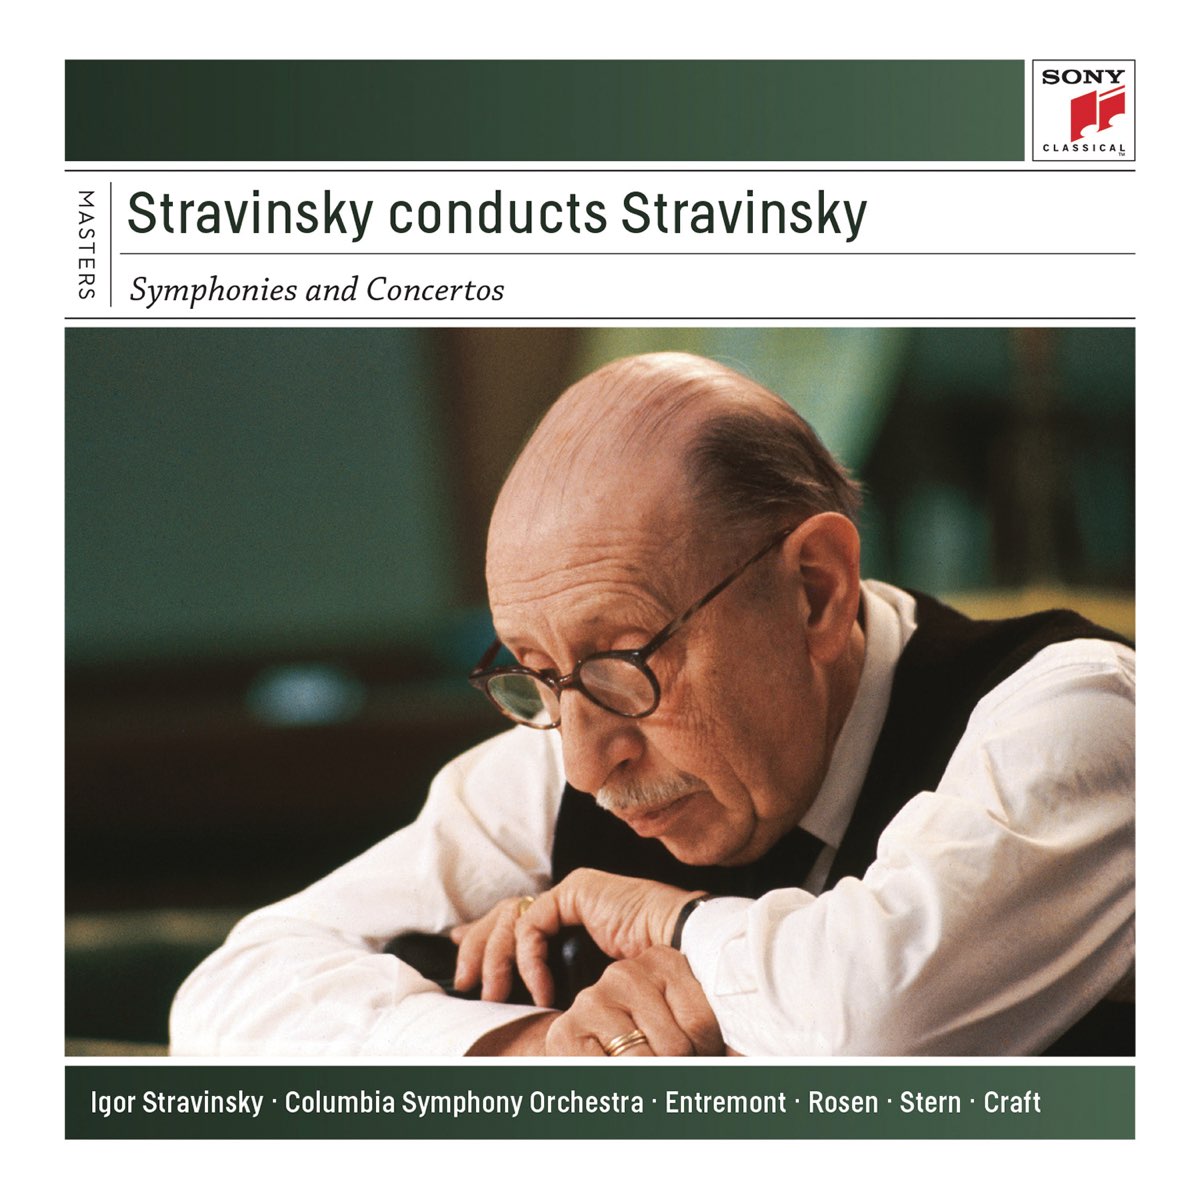 ‎stravinsky Conducts Stravinsky Symphonies And Concertos By Igor Stravinsky On Apple Music 9748